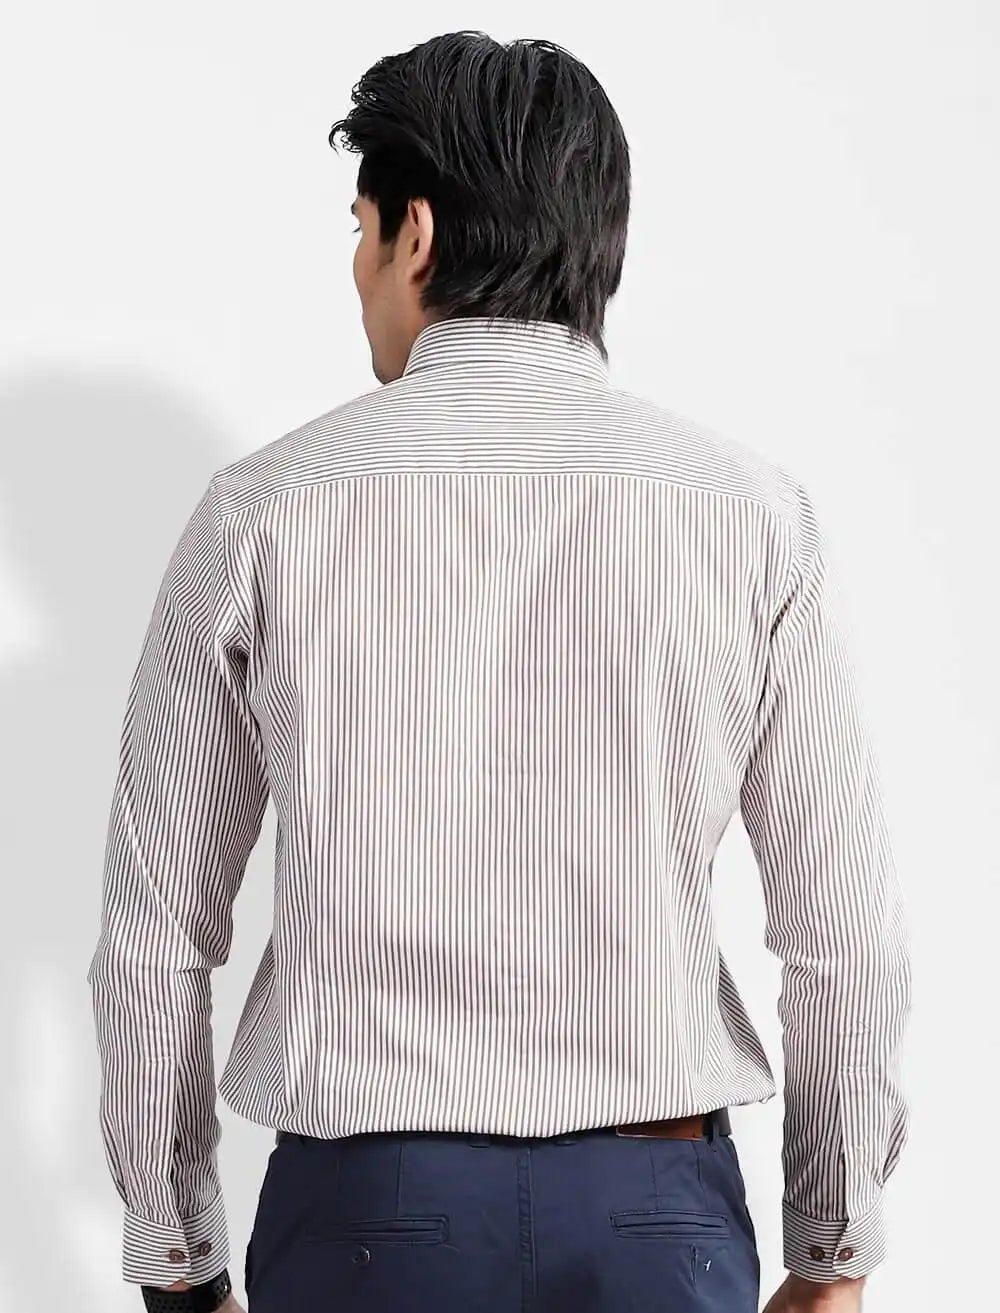 Stripe Men's Formal Shirt